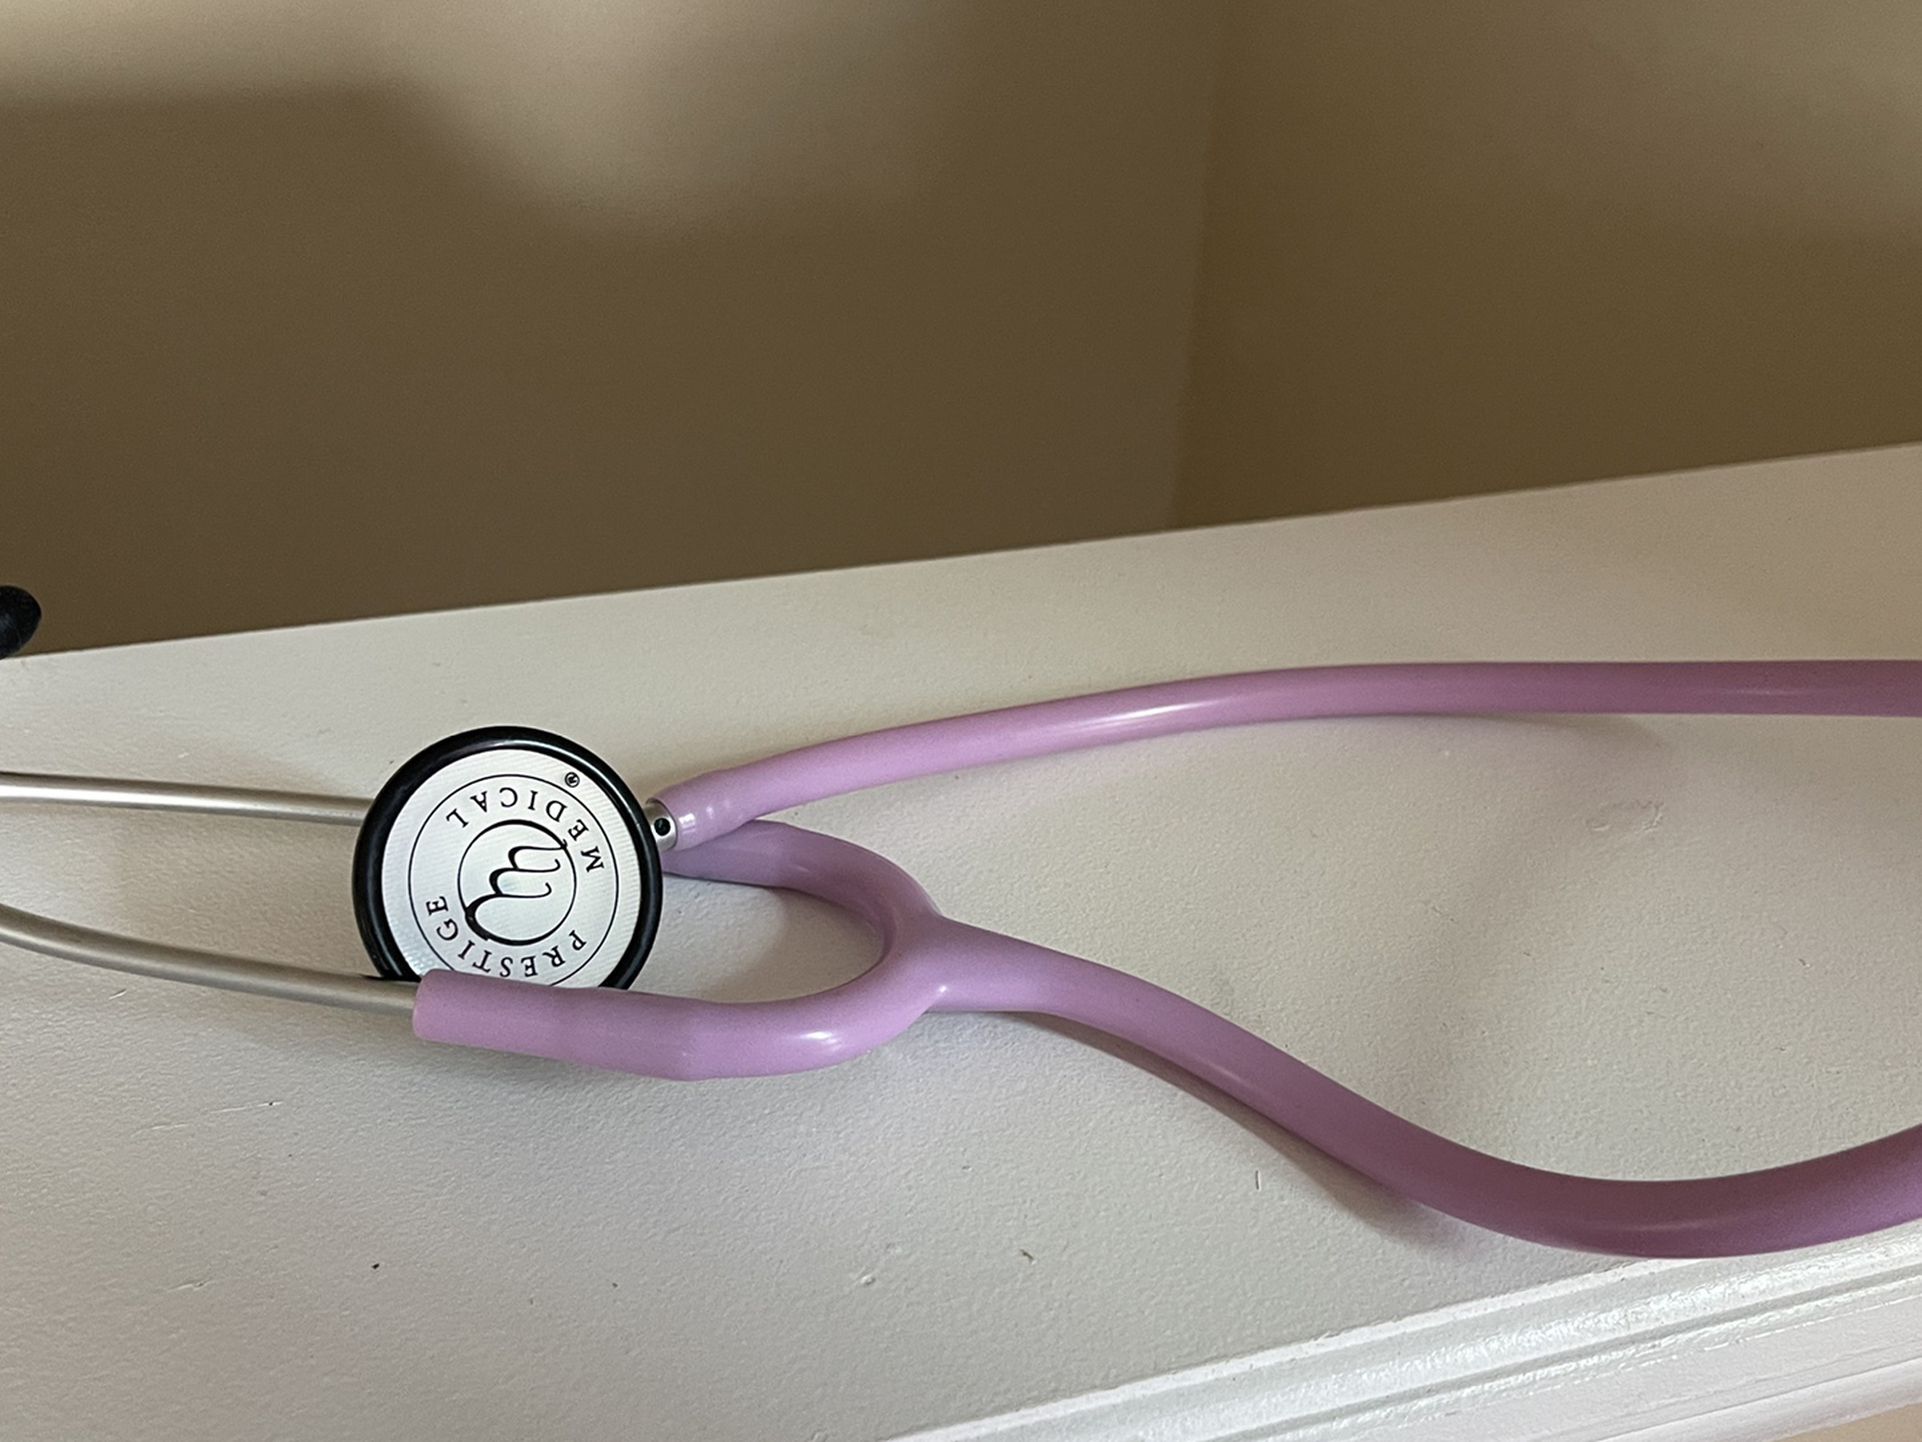 Prestige Medical Stethoscope